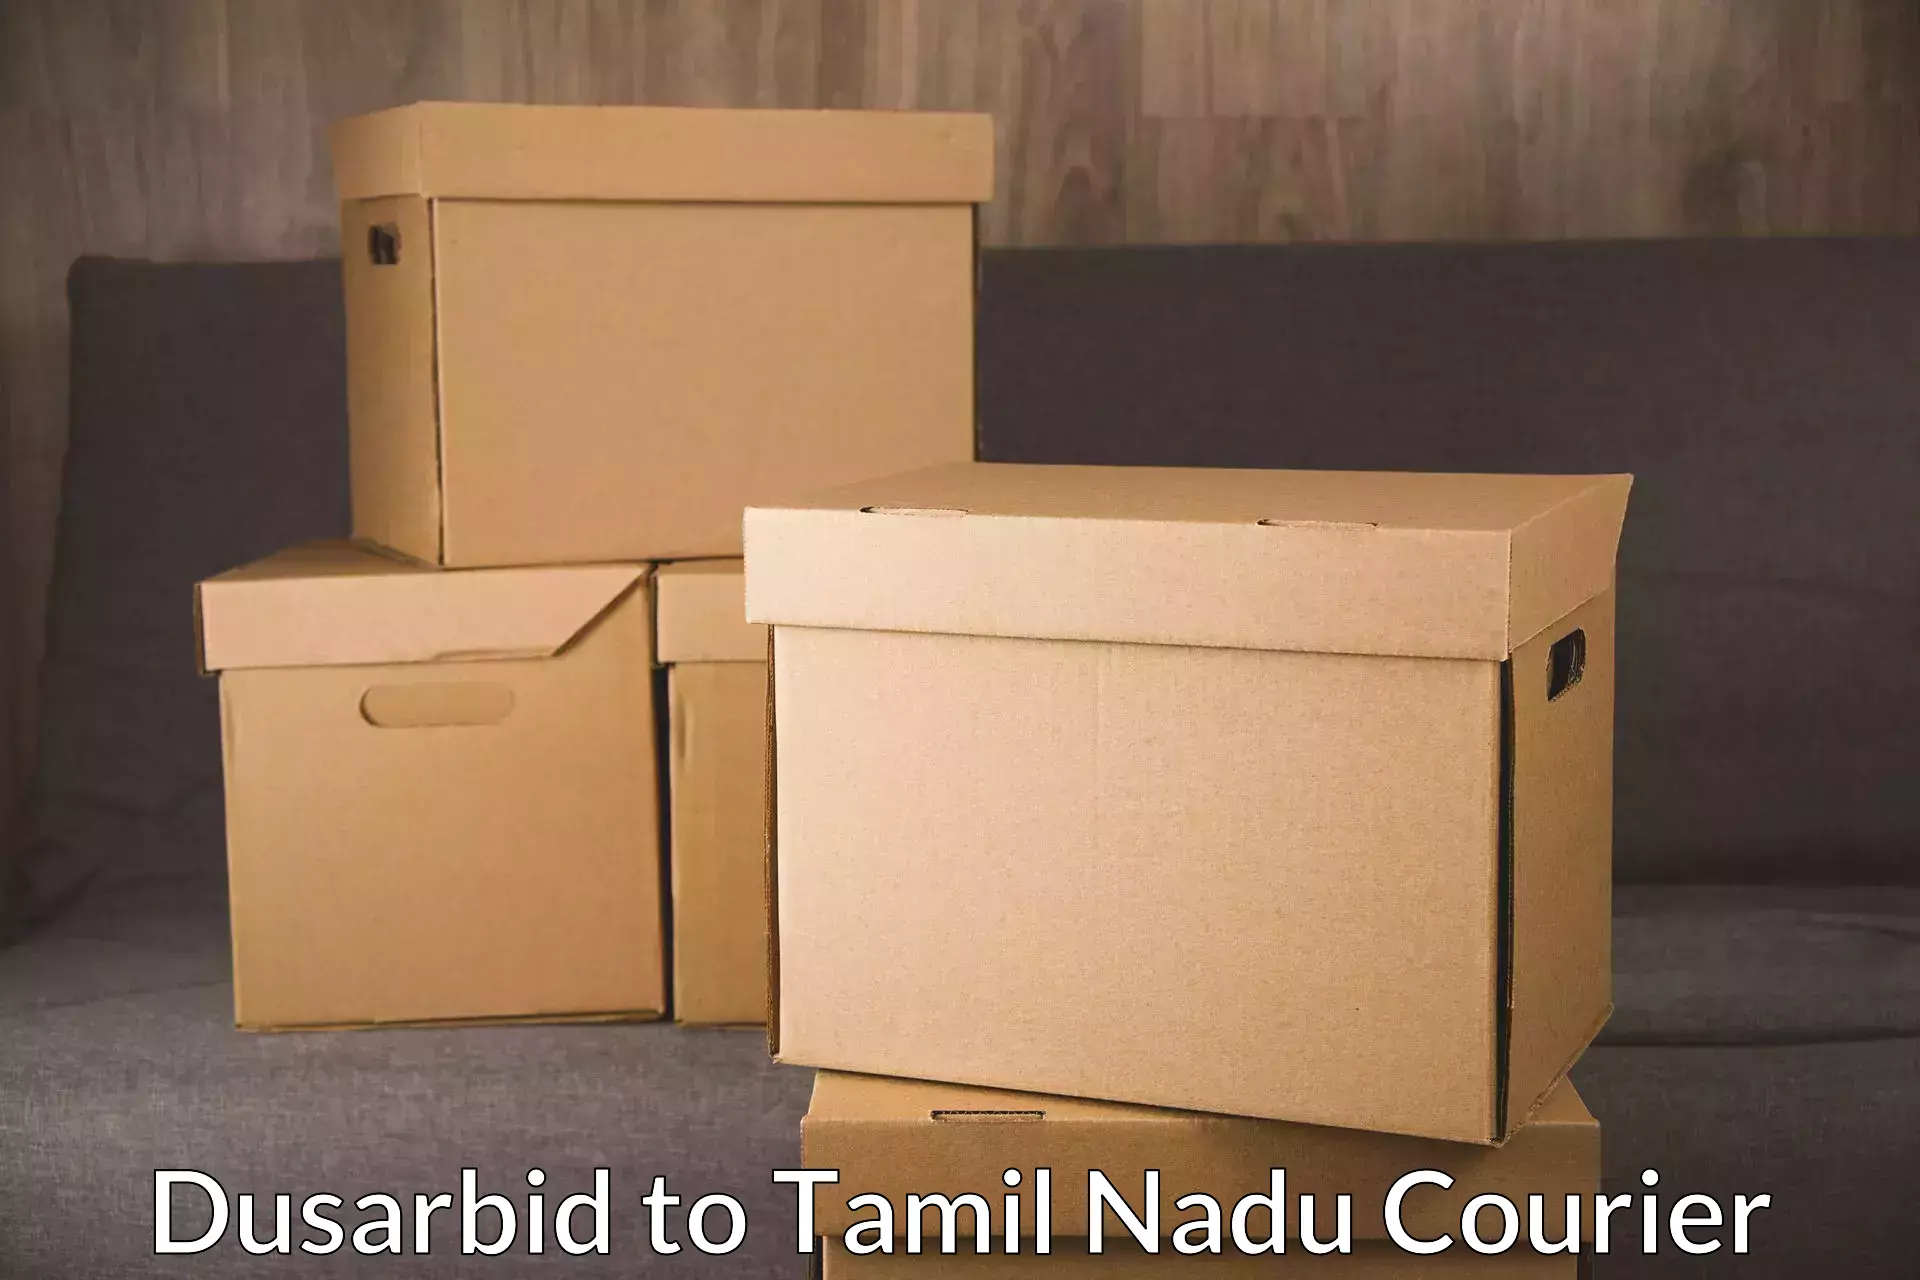 24-hour courier service Dusarbid to Chennai Port